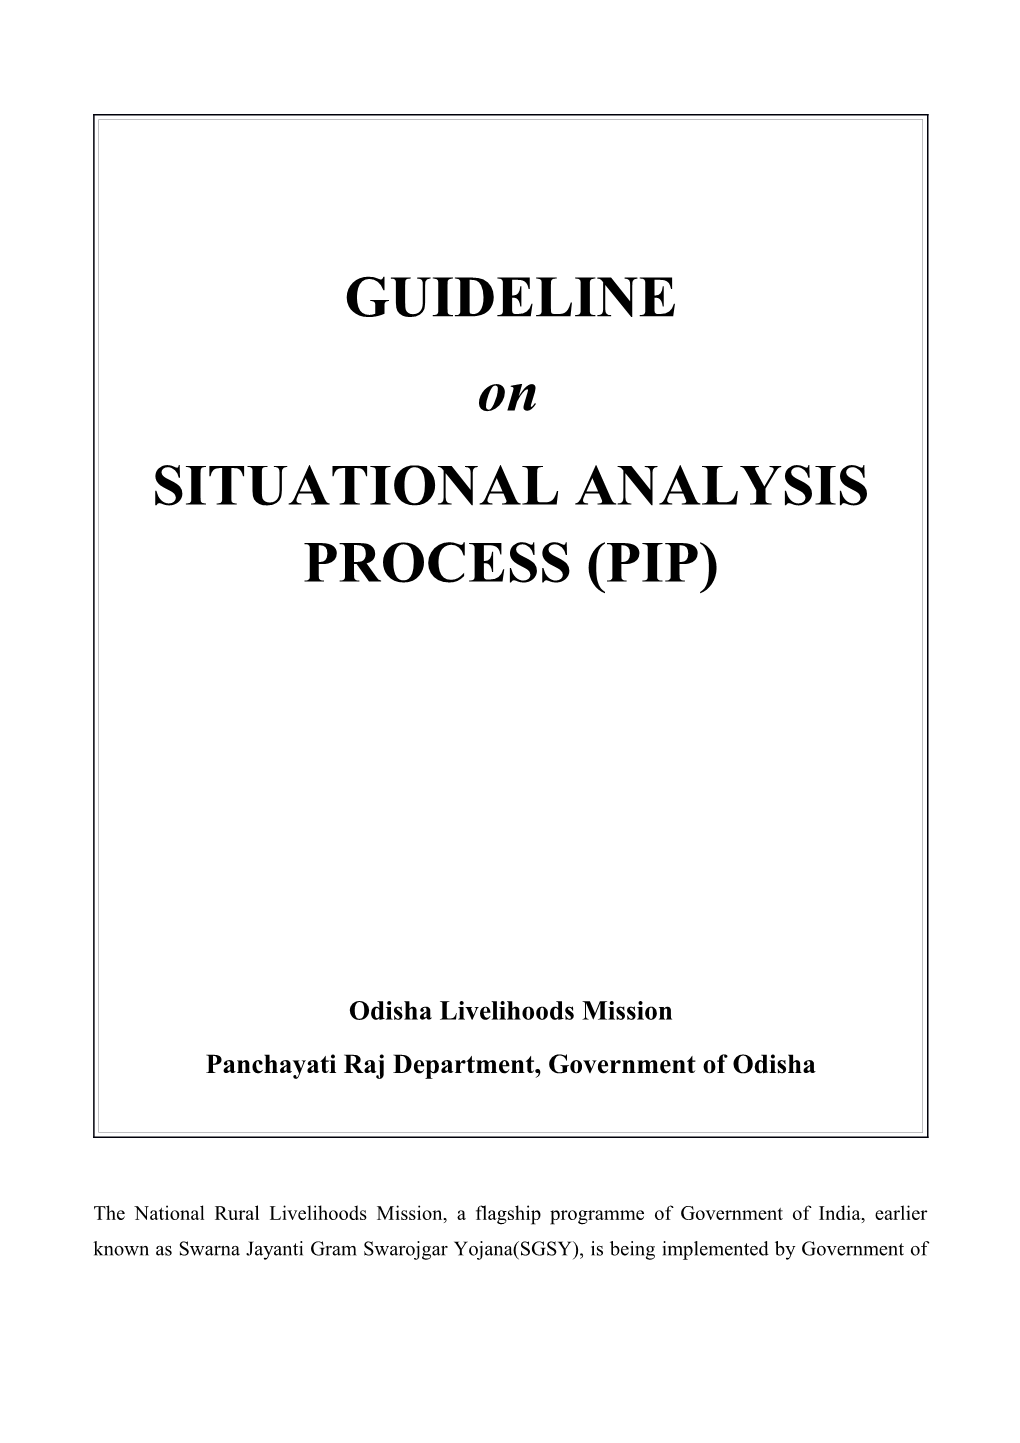 Situational Analysis Guideline